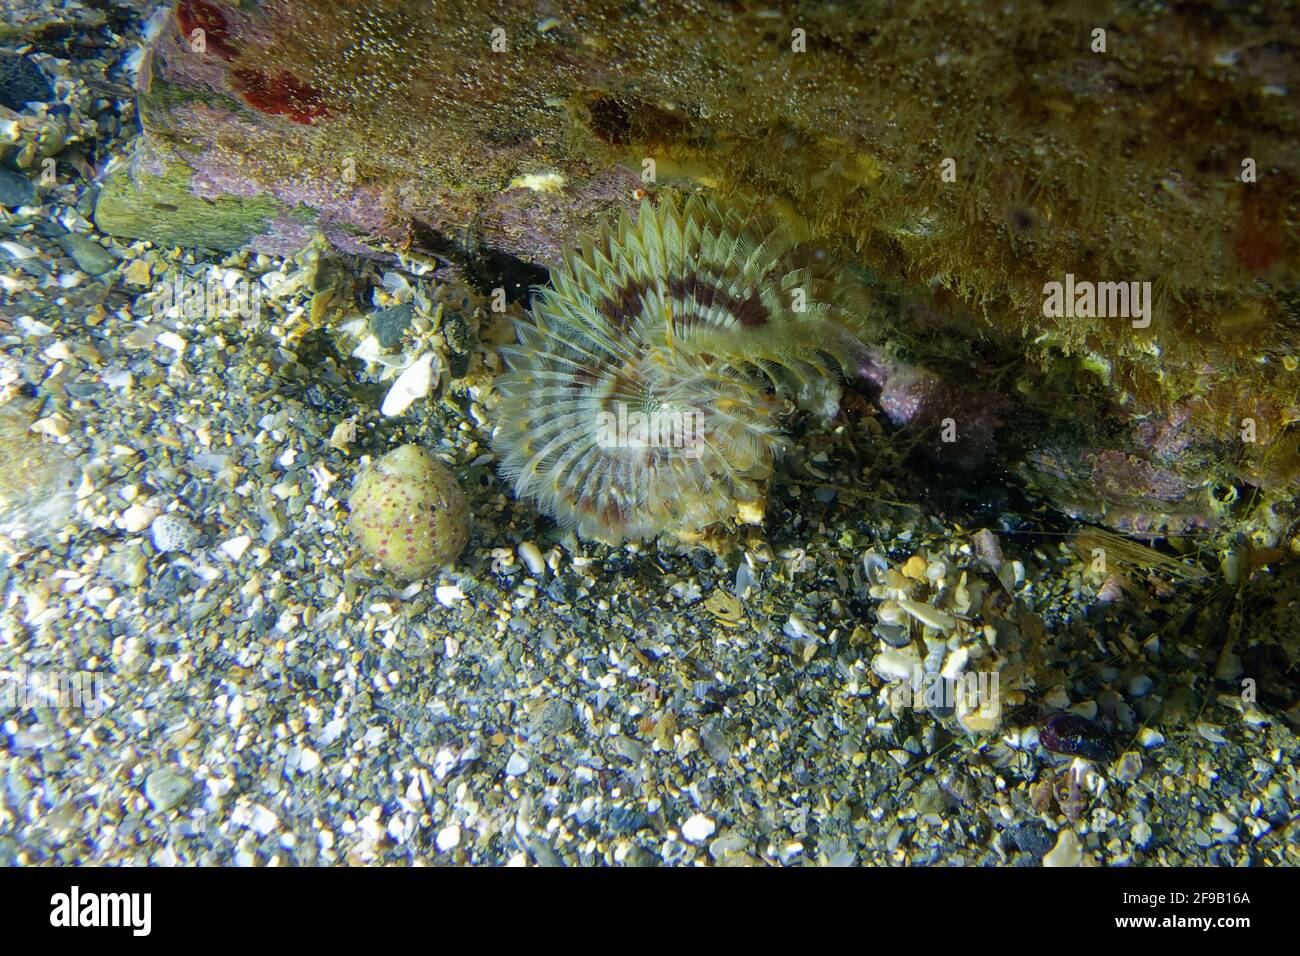 Fan worm (Megalomma vesiculosum) in Mediterranean Sea Stock Photo